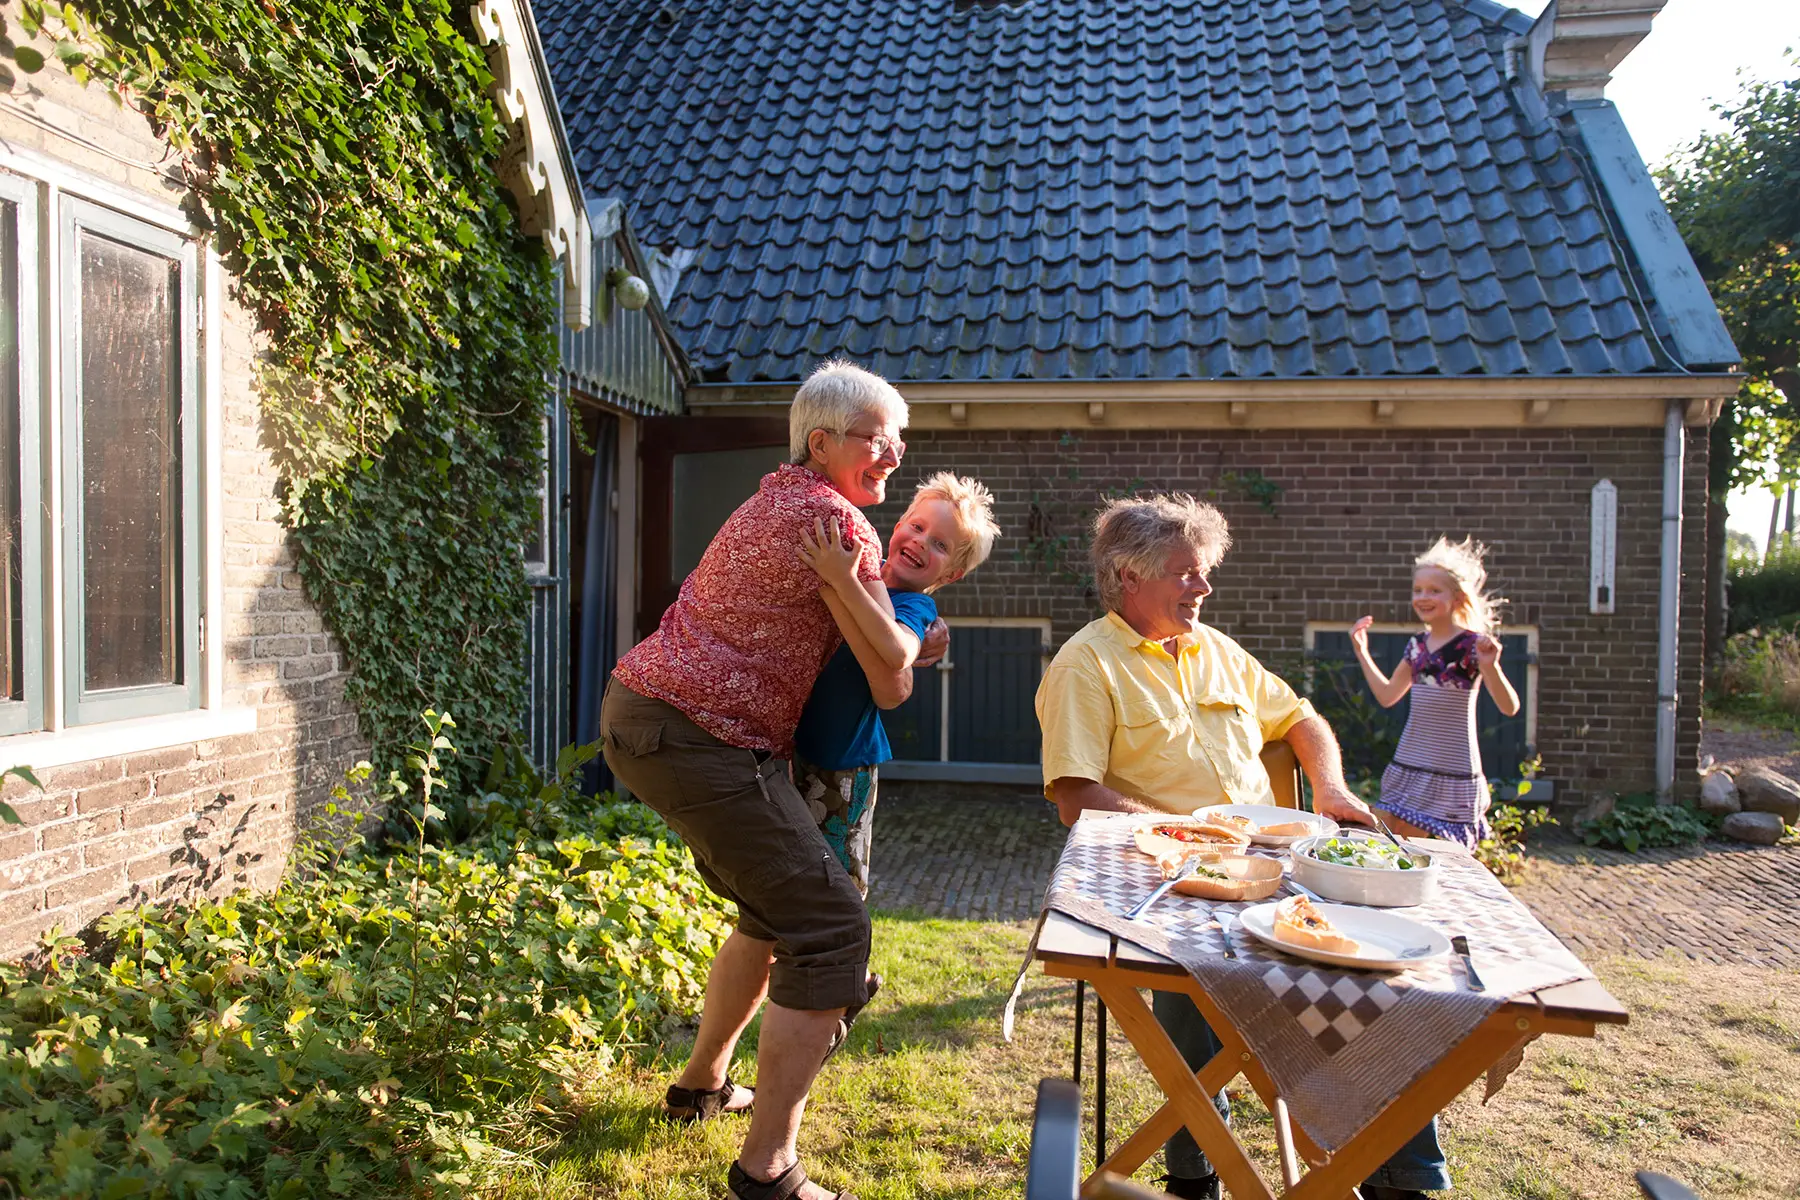 Grandparents hugging their grandchildren in a garden on a sunny evening